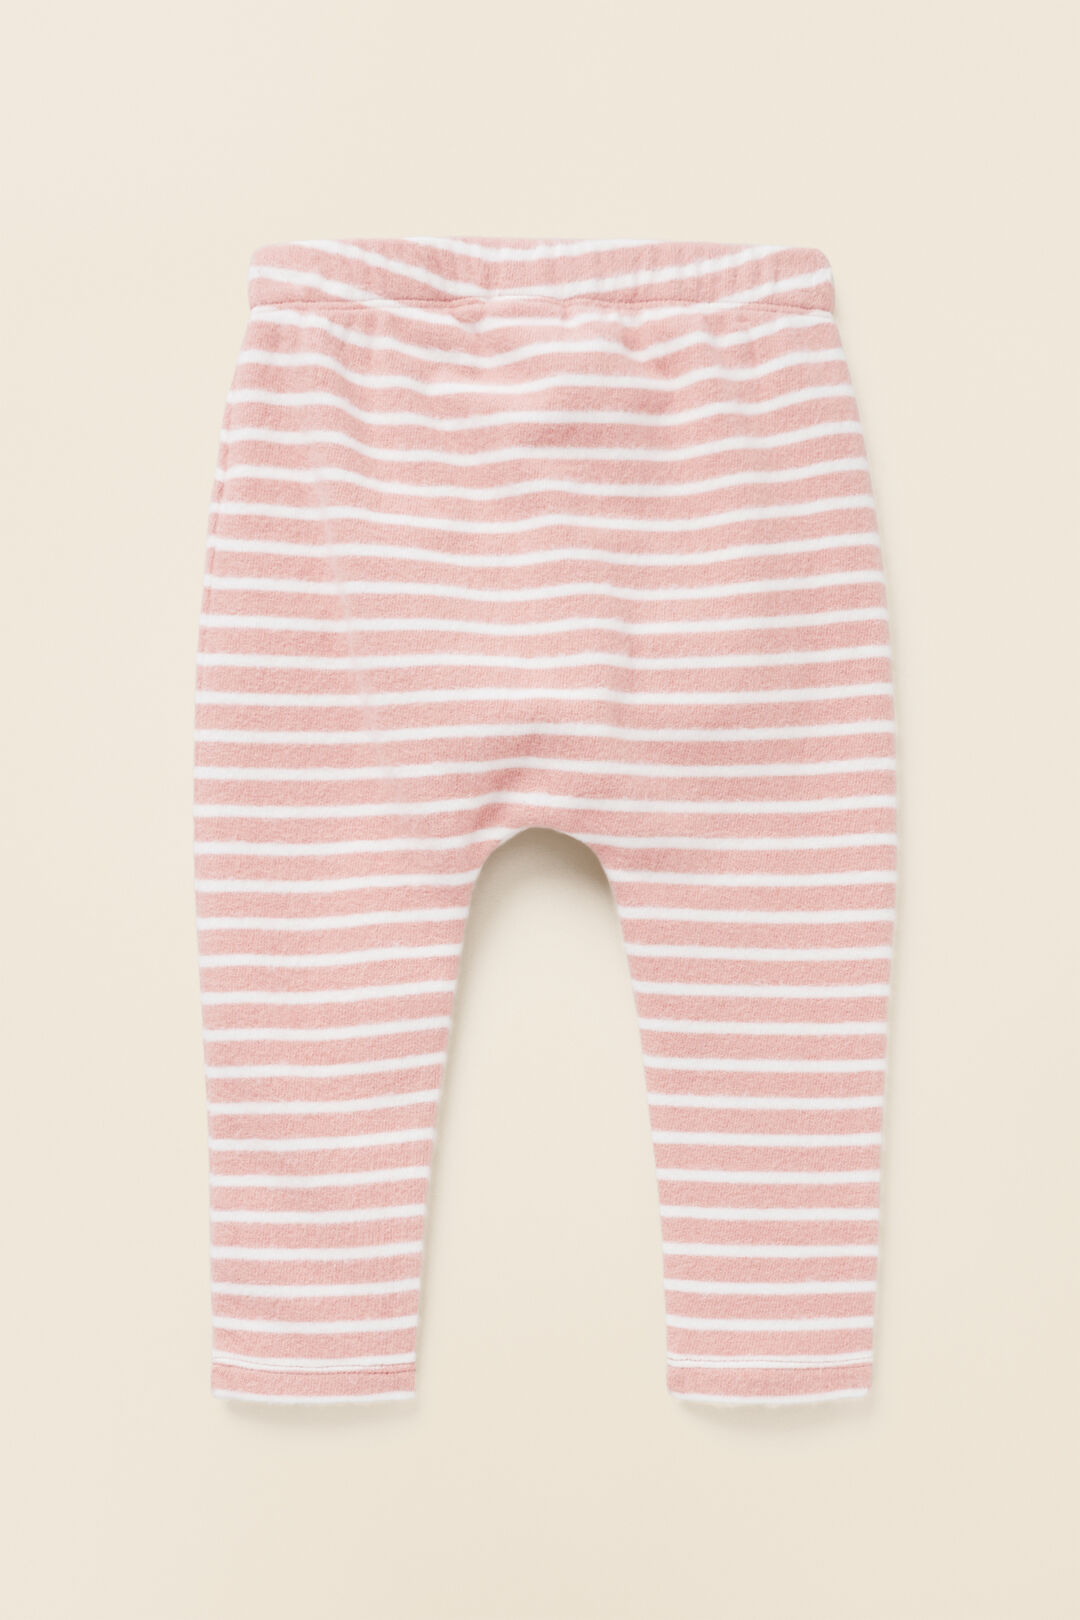 Brushed Stripe Legging  Chalk Pink  hi-res